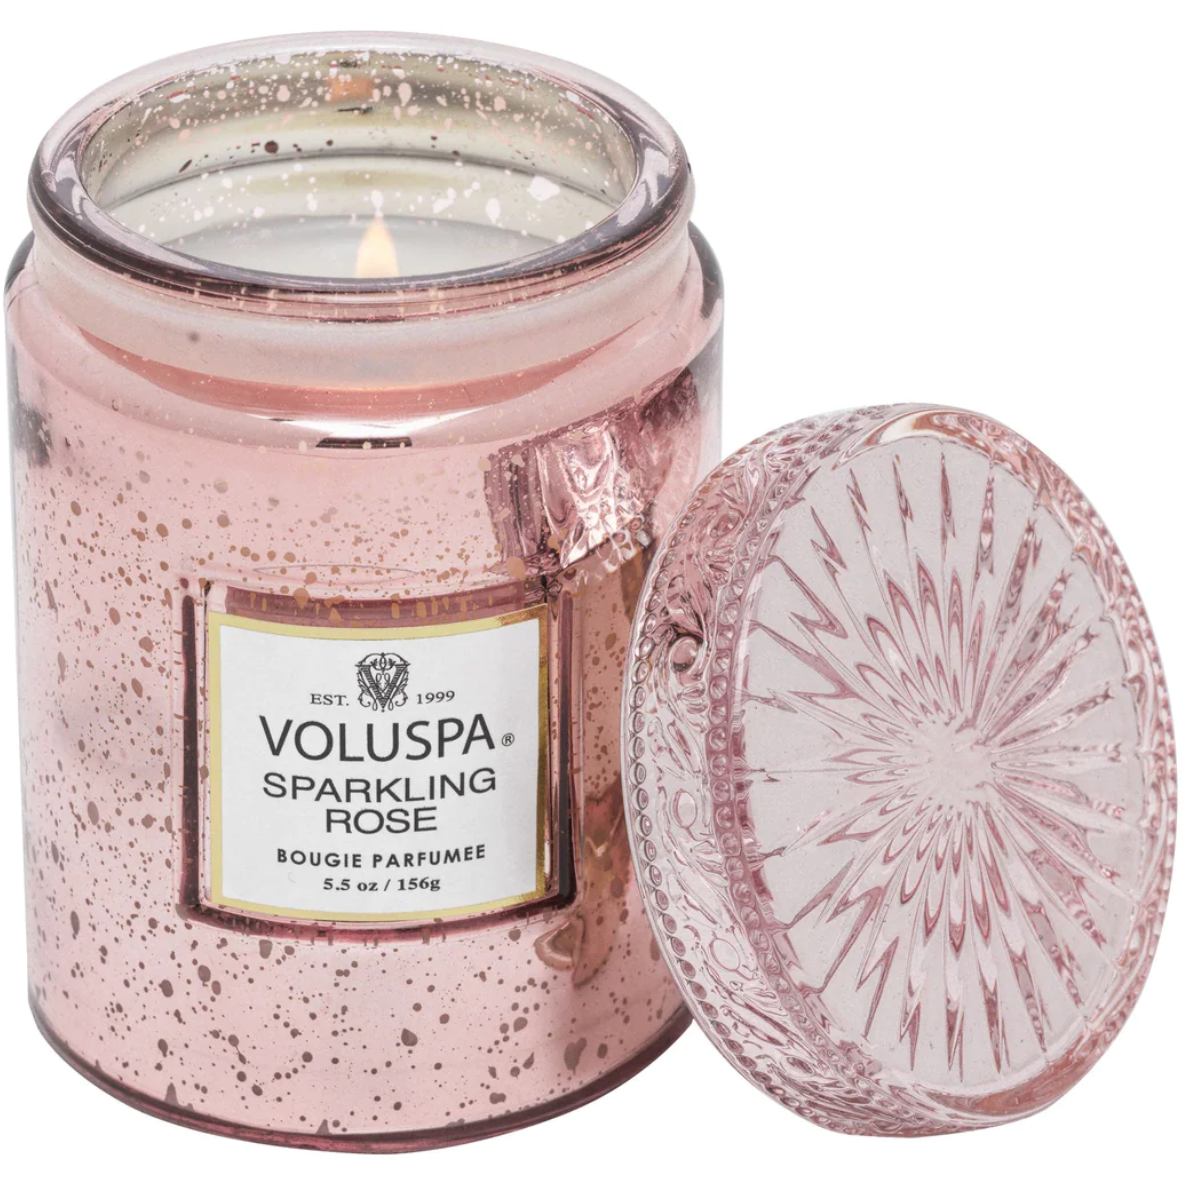 Voluspa: Sparkling Rose Collection